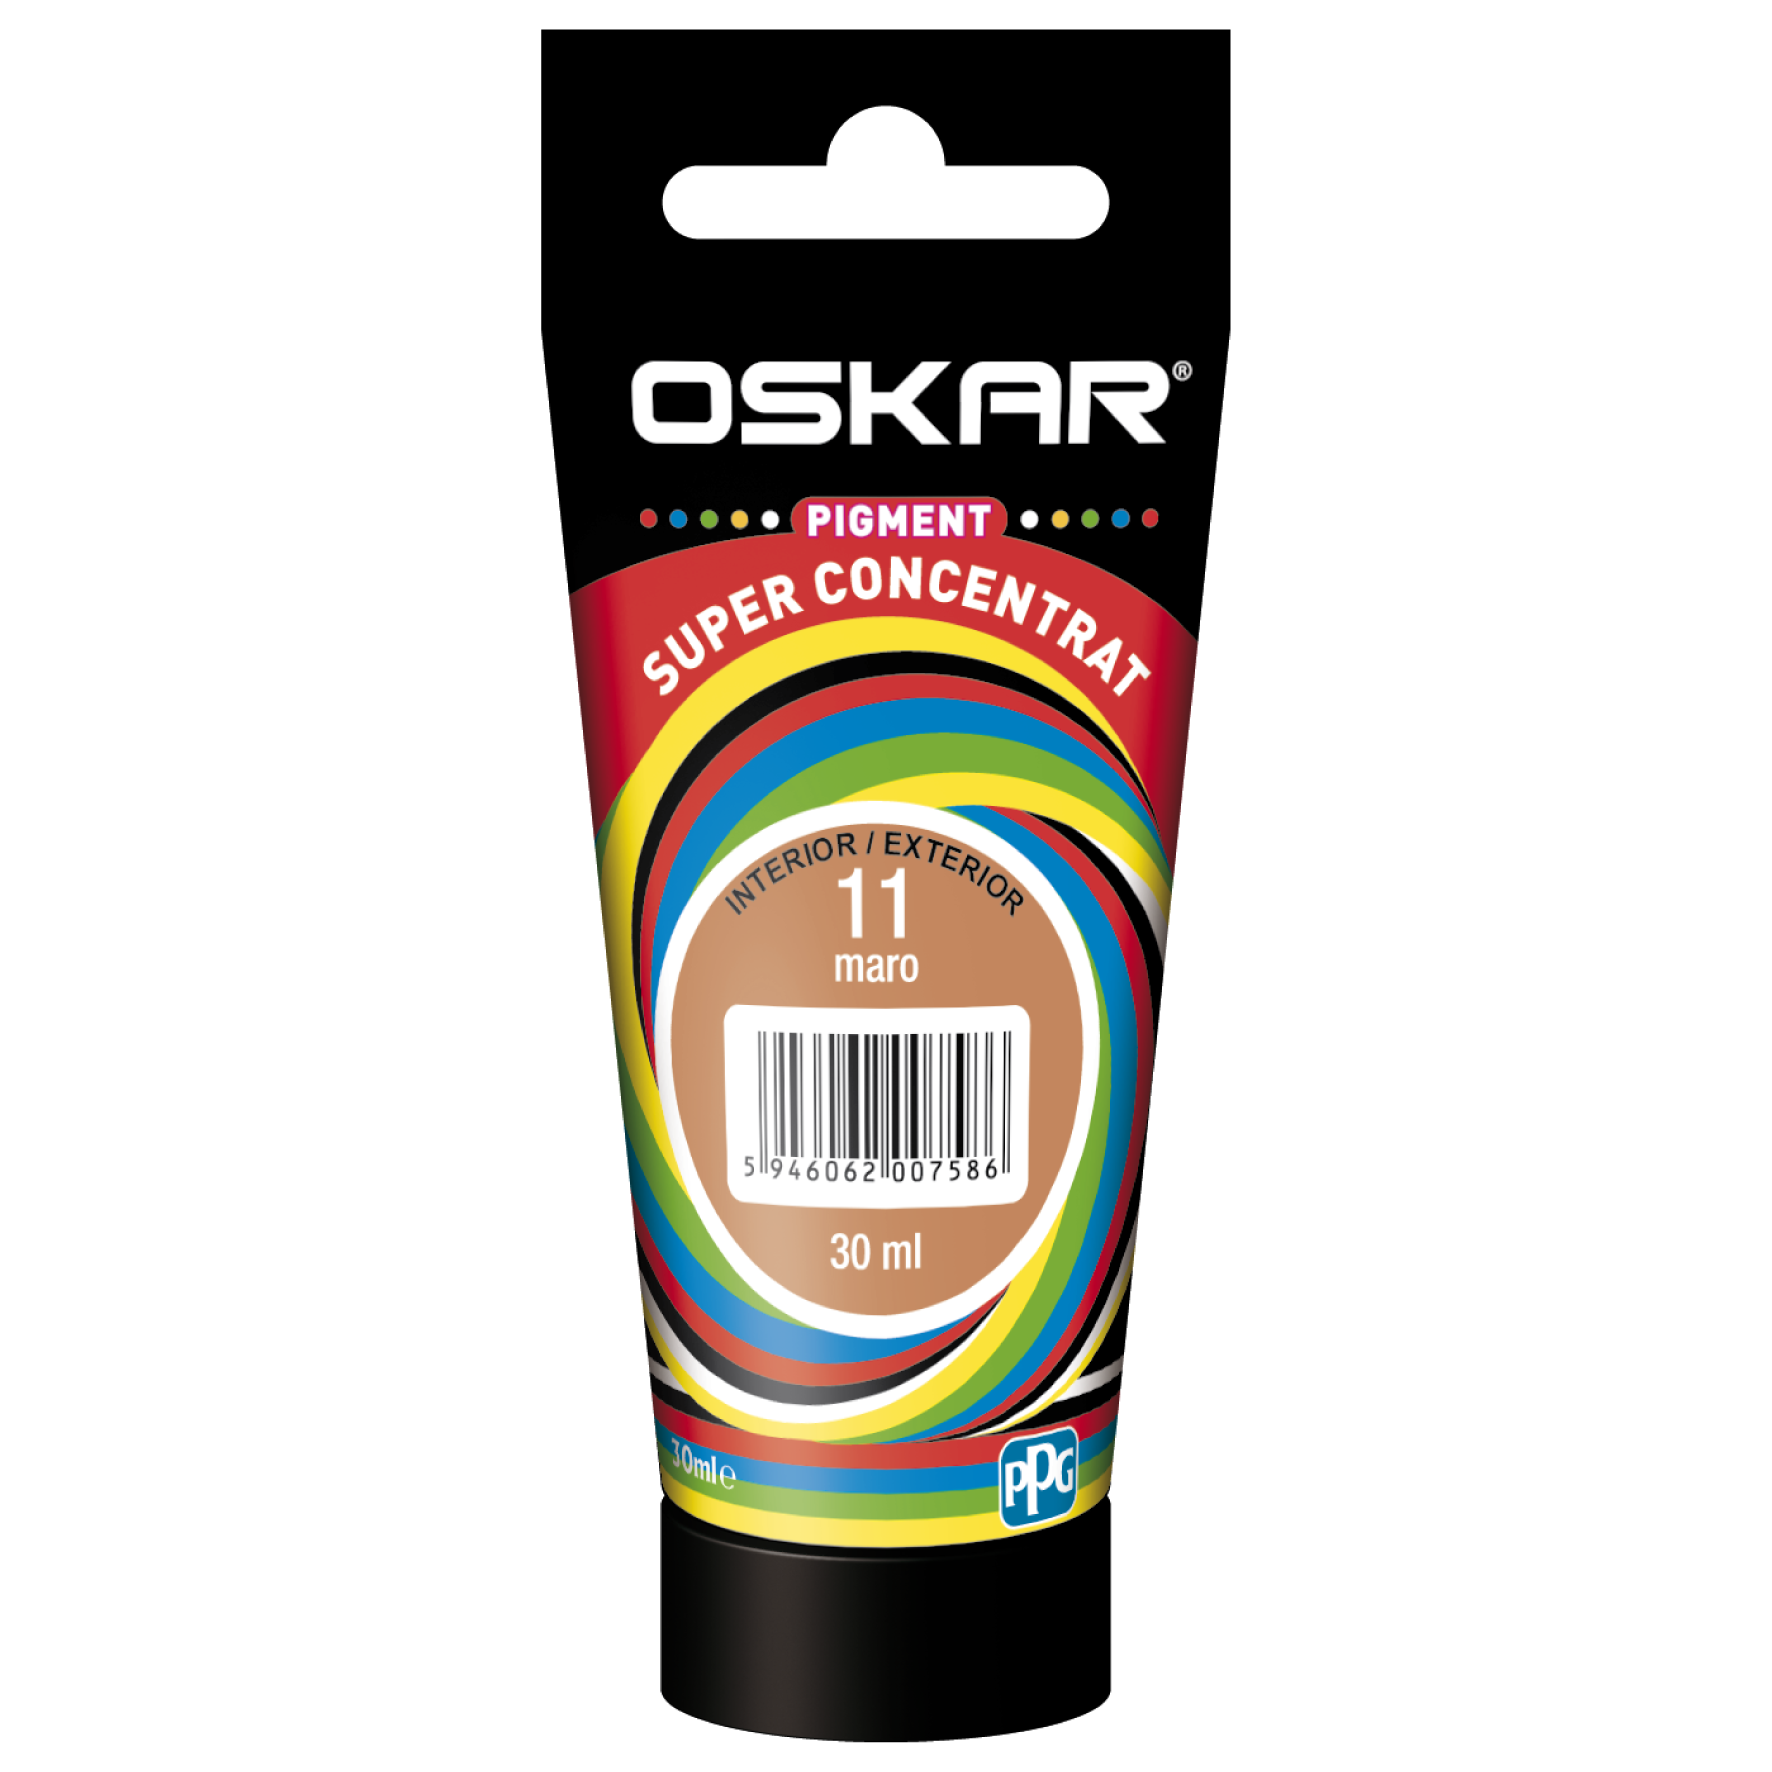 Pigment vopsea lavabila Oskar superconcentrat, maro 11, 30 ml -11